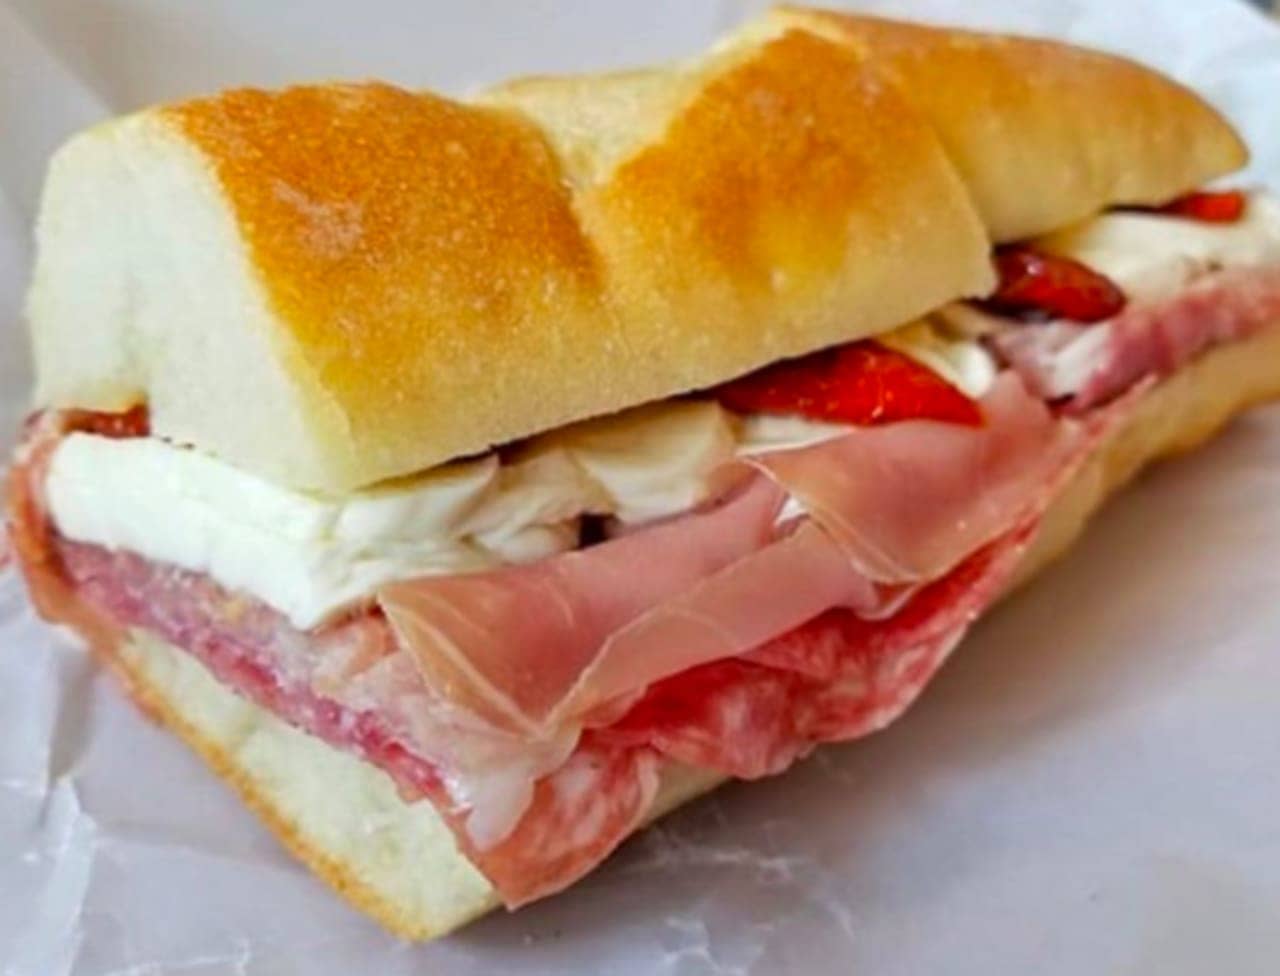 Andrea's Salumeria in Jersey City was named the best sandwich spot in New Jersey by BuzzFeed.